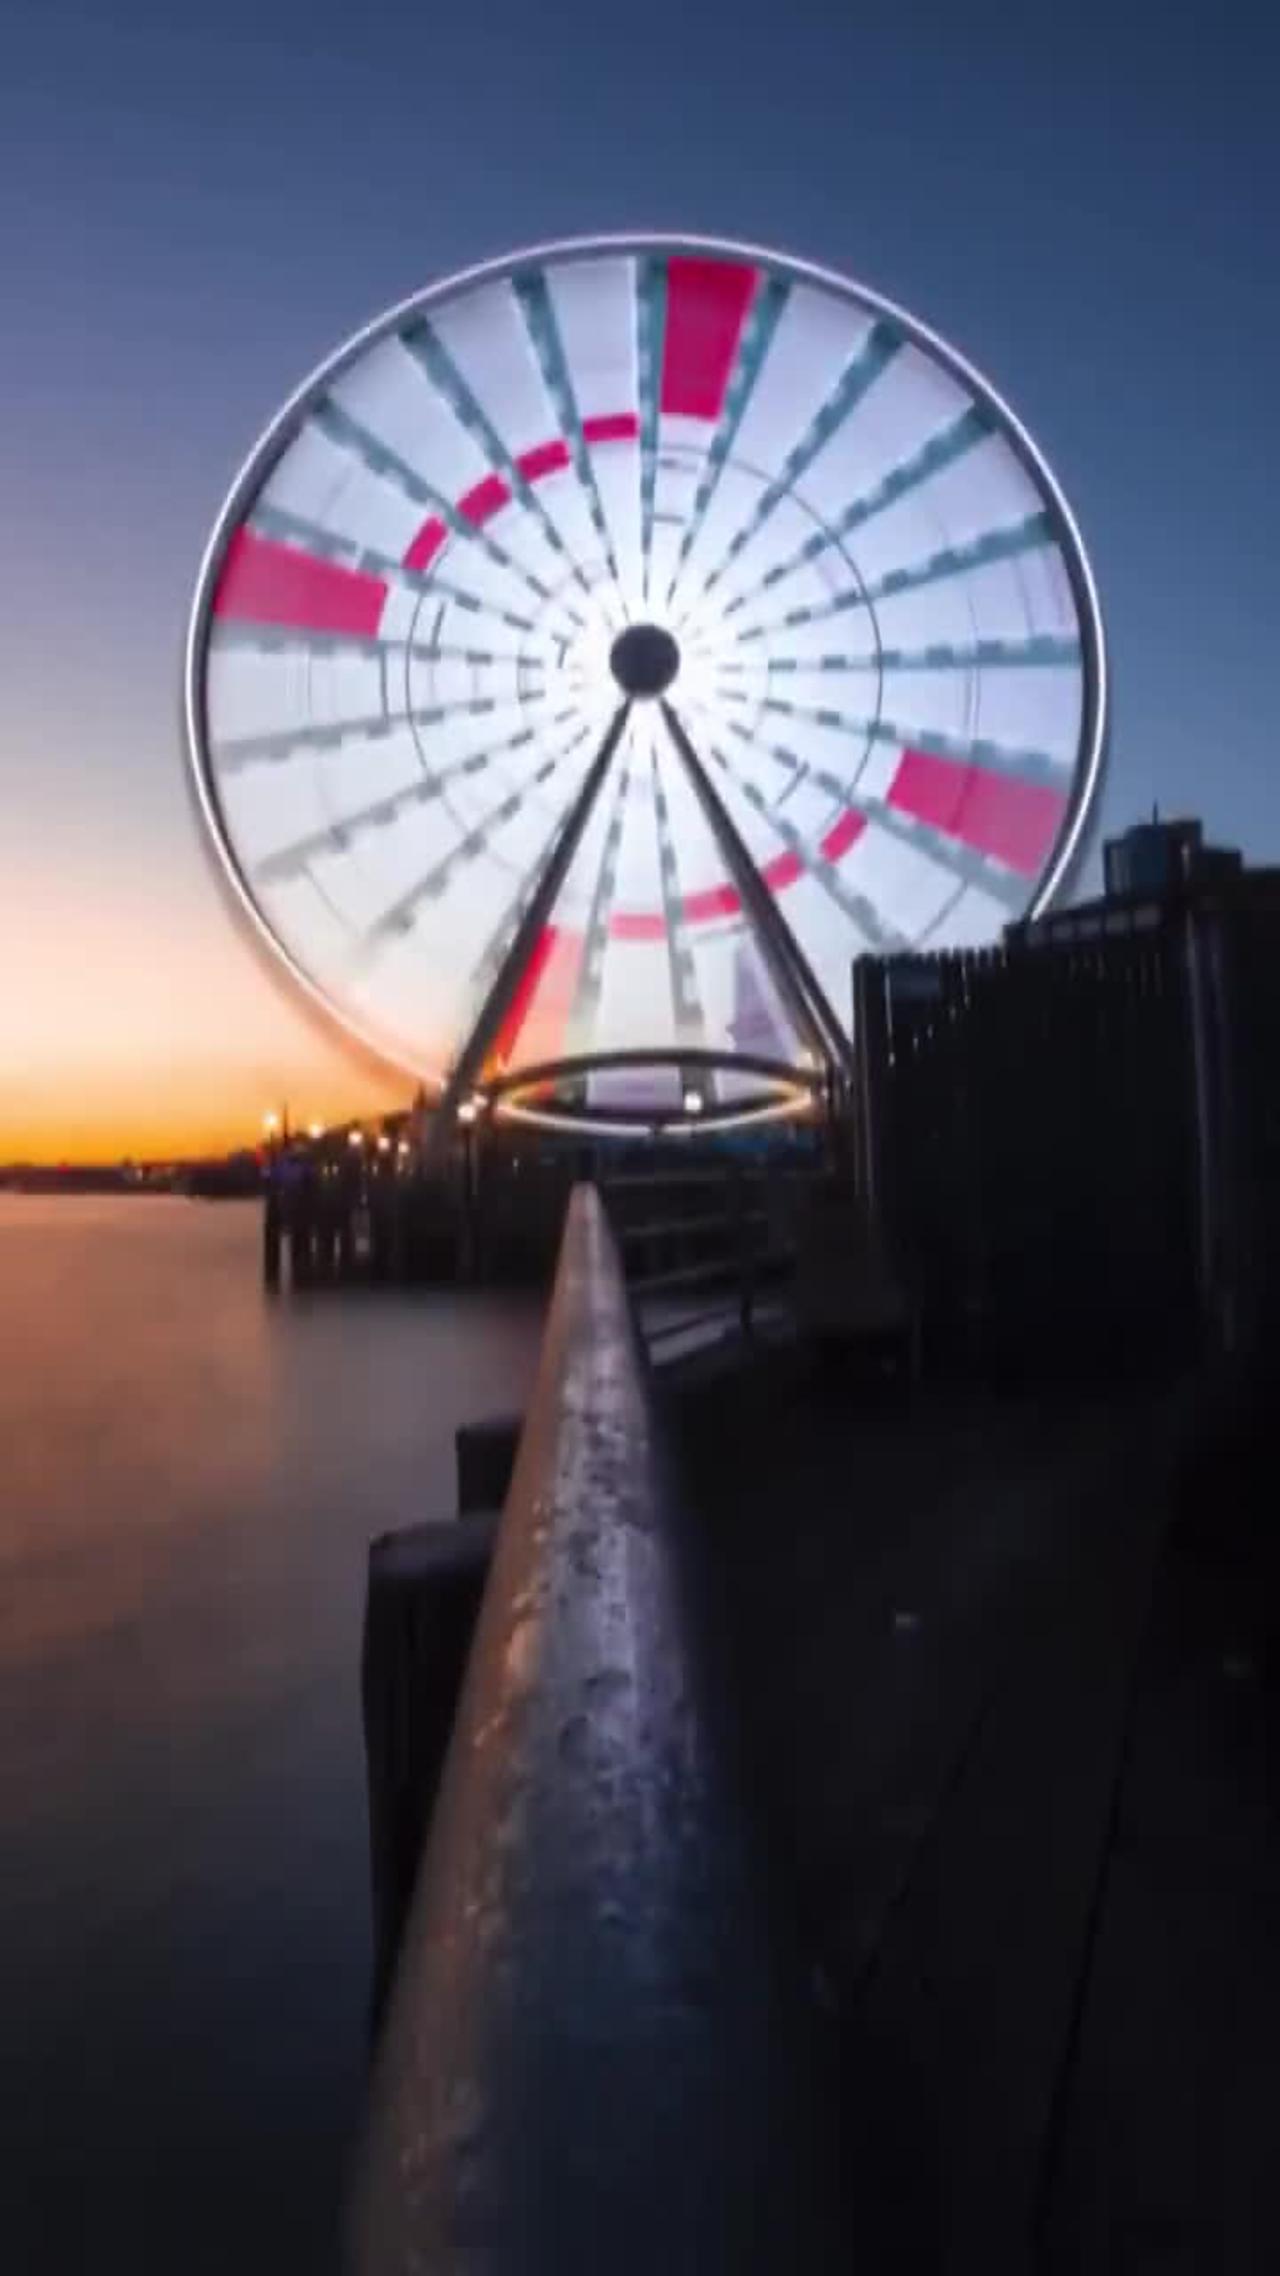 Scenery under the Ferris wheel